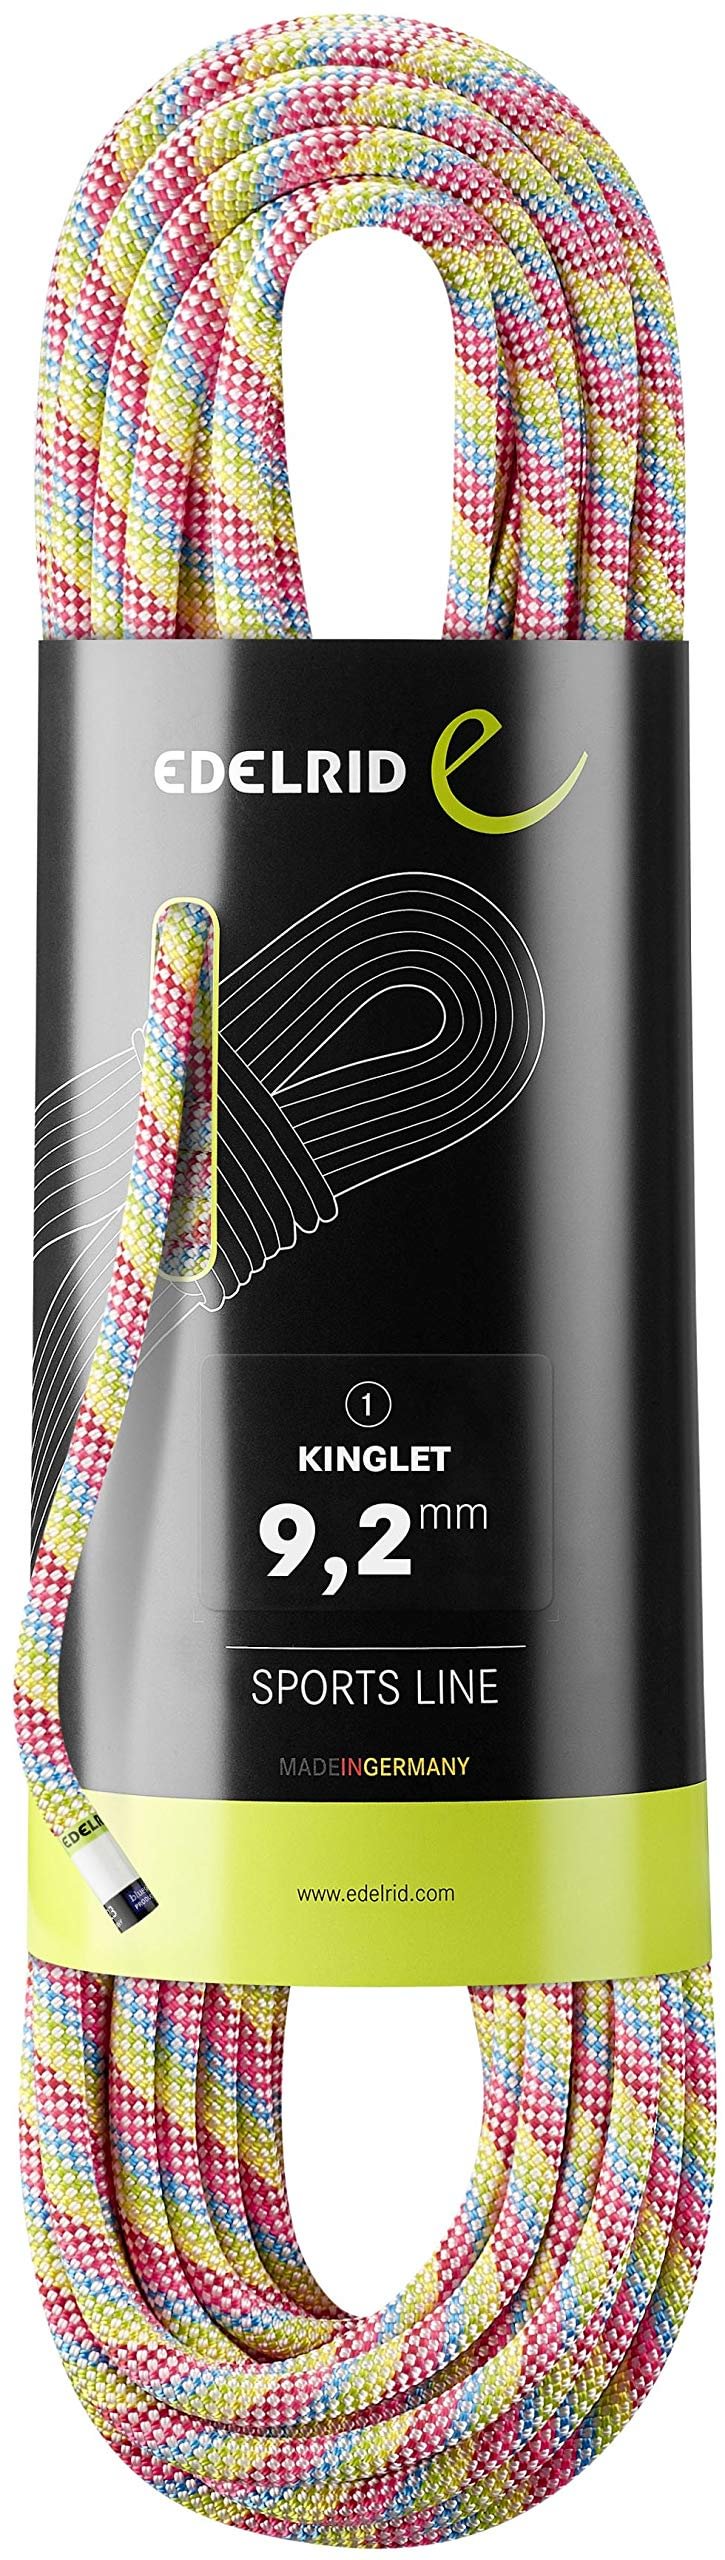 EDELRID Kinglet 9.2mm Dynamic Climbing Rope